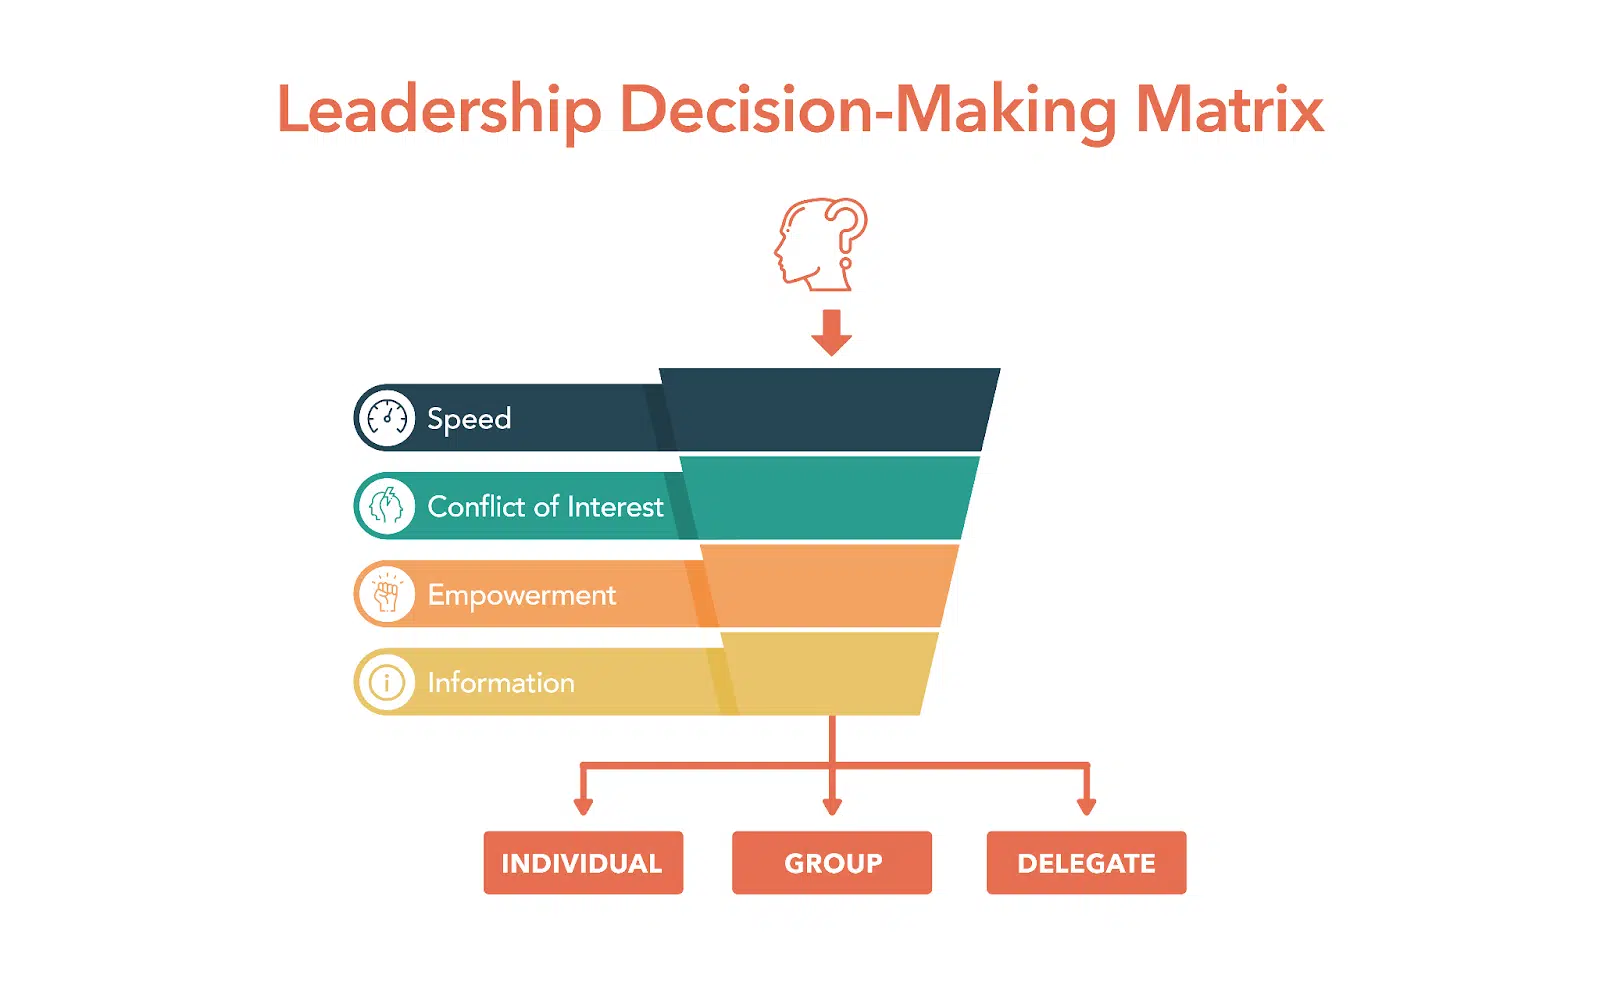 Leadership decision-making matrix